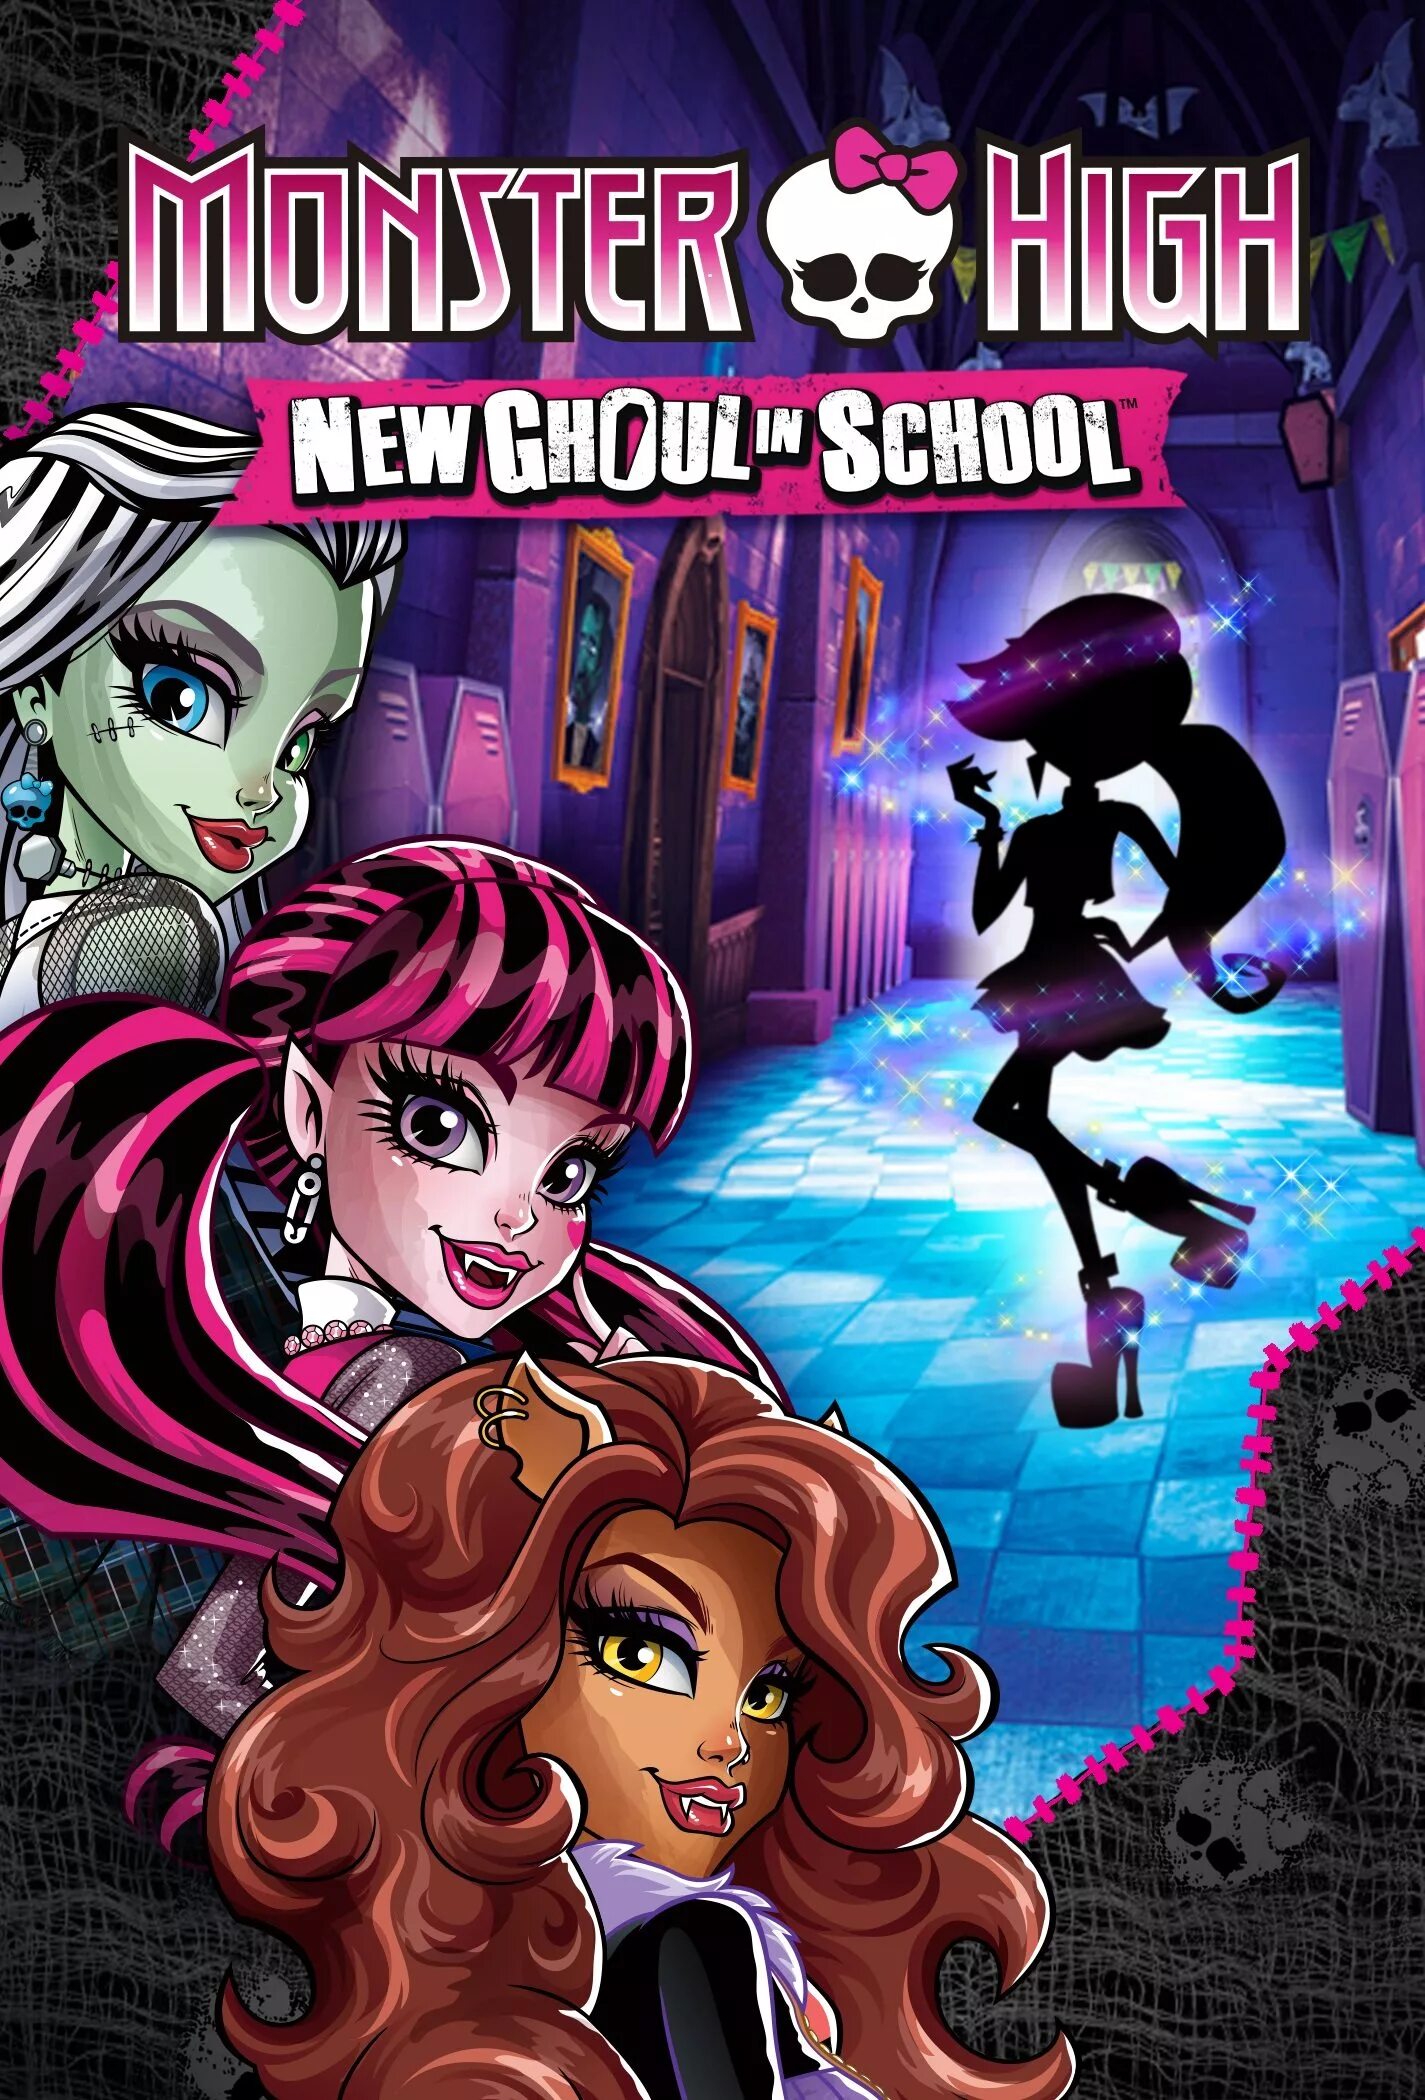 Игра Monster High New Ghoul. Монстер Хай новая нечисть школы. Monster High New Ghoul in School. Барби Xbox 360.